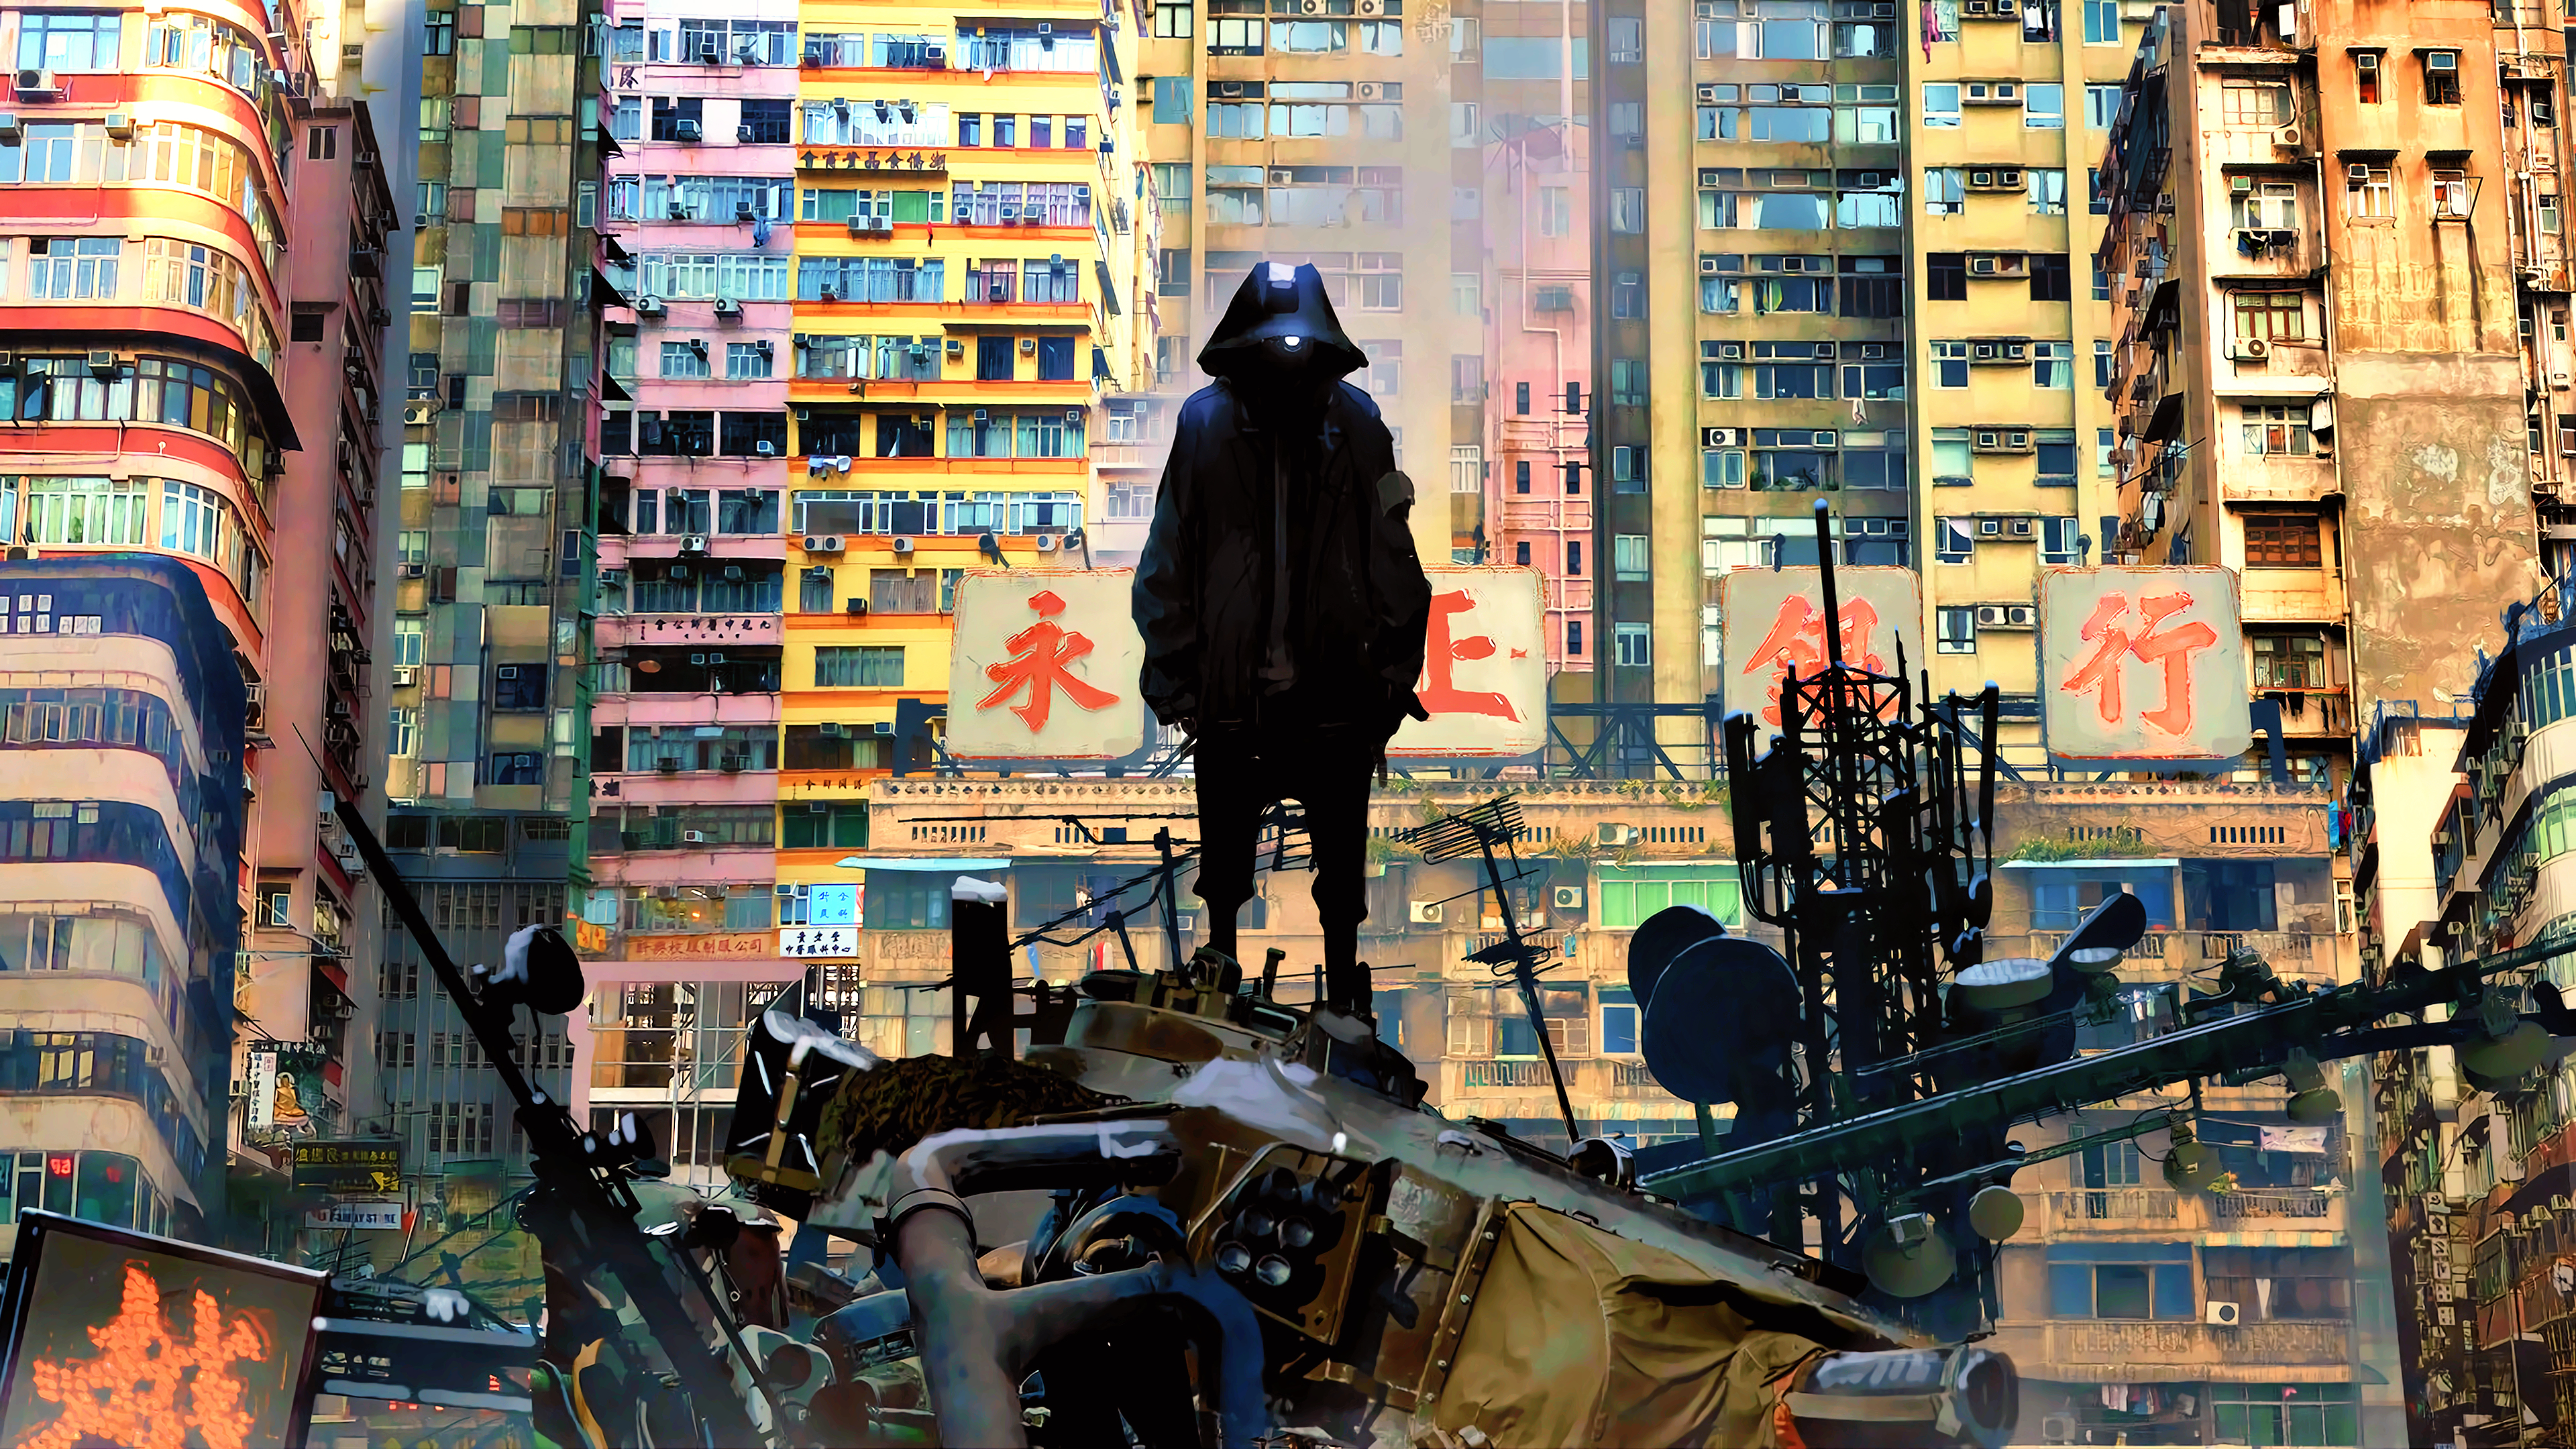 General 3840x2160 science fiction digital art concept art artwork futuristic fantasy art fan art CGI cyberpunk cyber cityscape block of flats